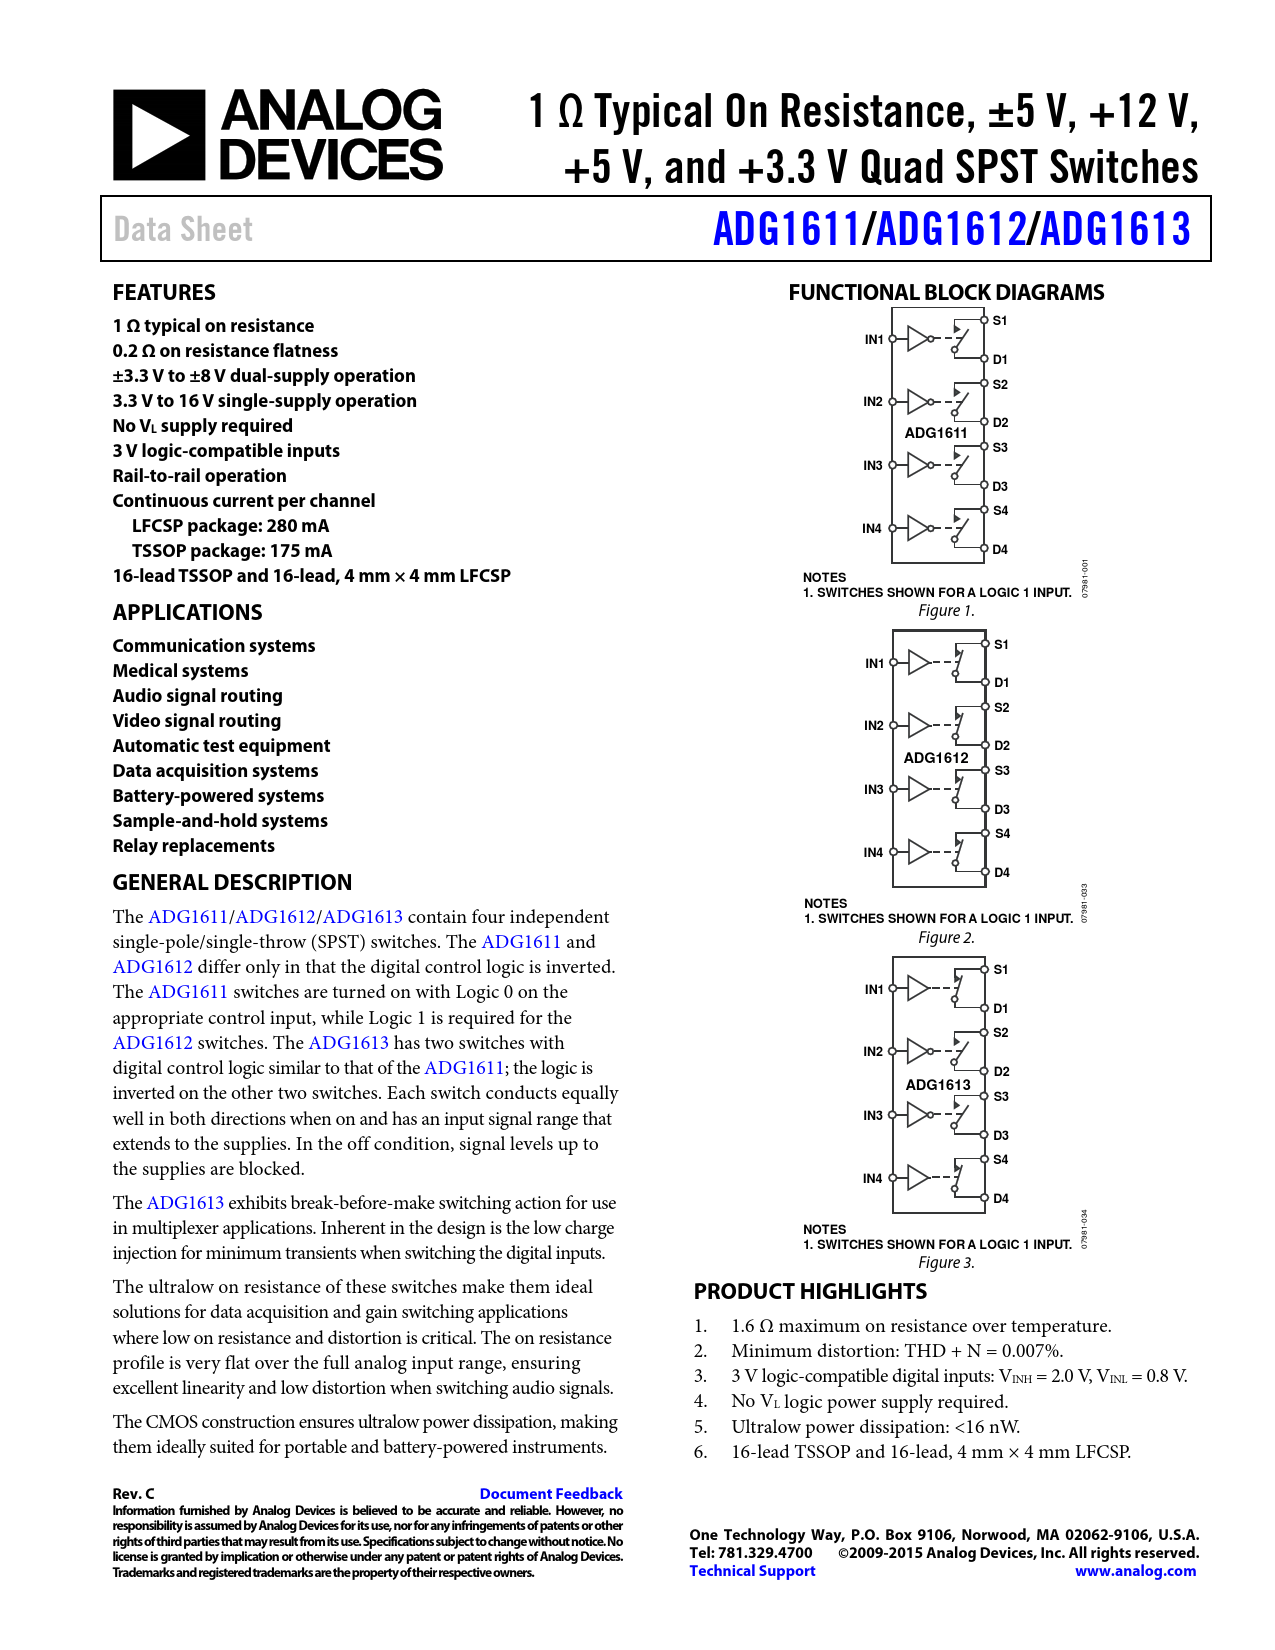 Datasheet ADG1611, ADG1612, ADG1613 Analog Devices, Revision: C